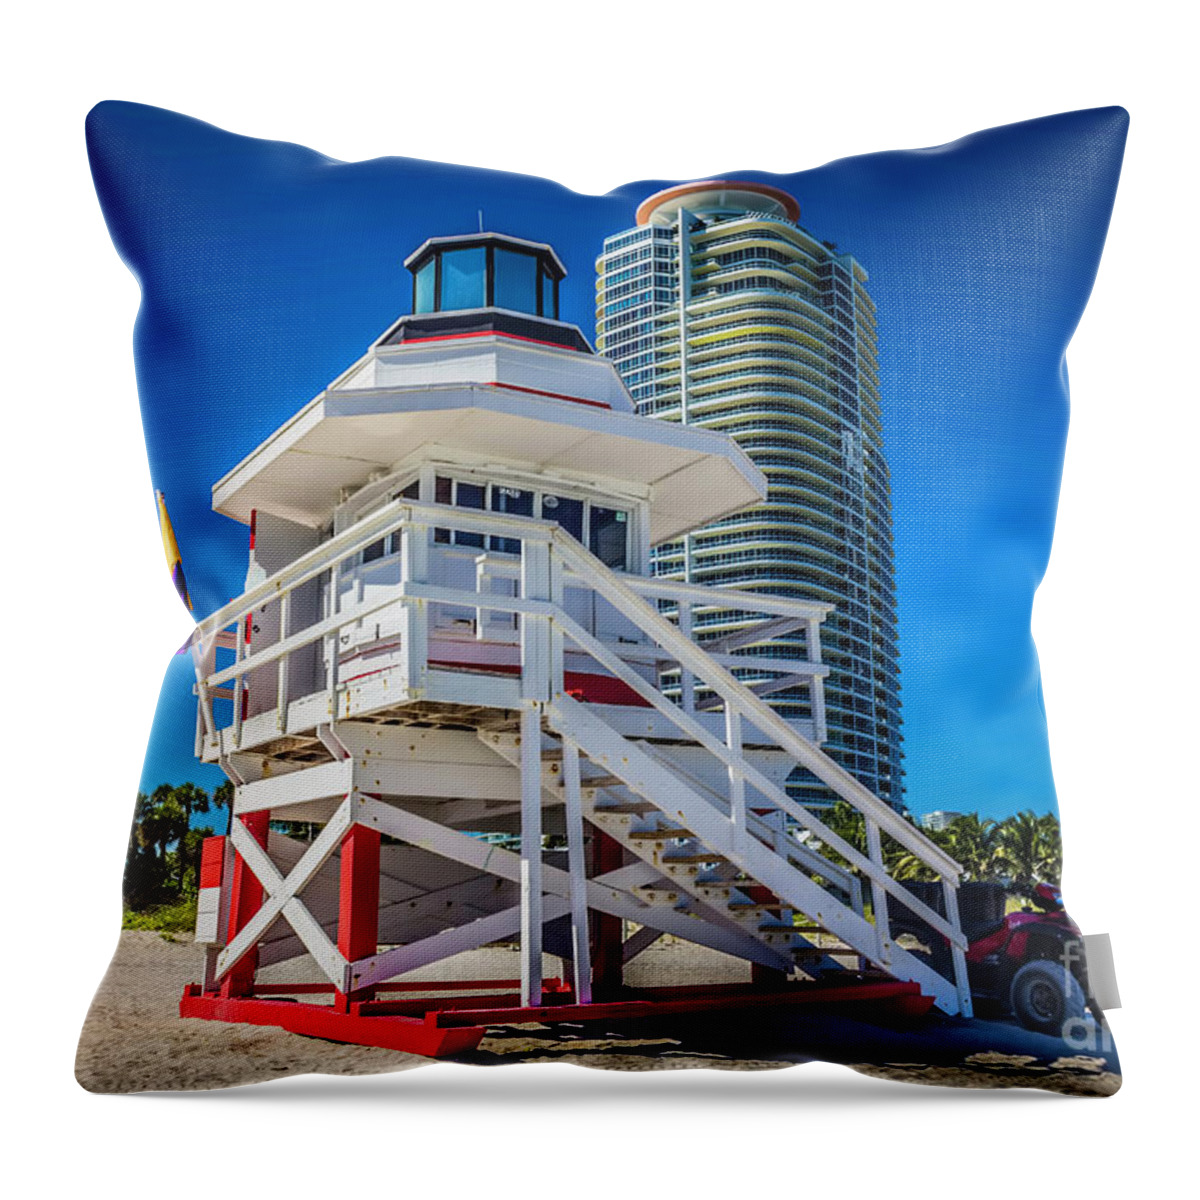 Miami Beach Lifeguard House Throw Pillow featuring the photograph Miami Beach Lifeguard House 4465 by Carlos Diaz